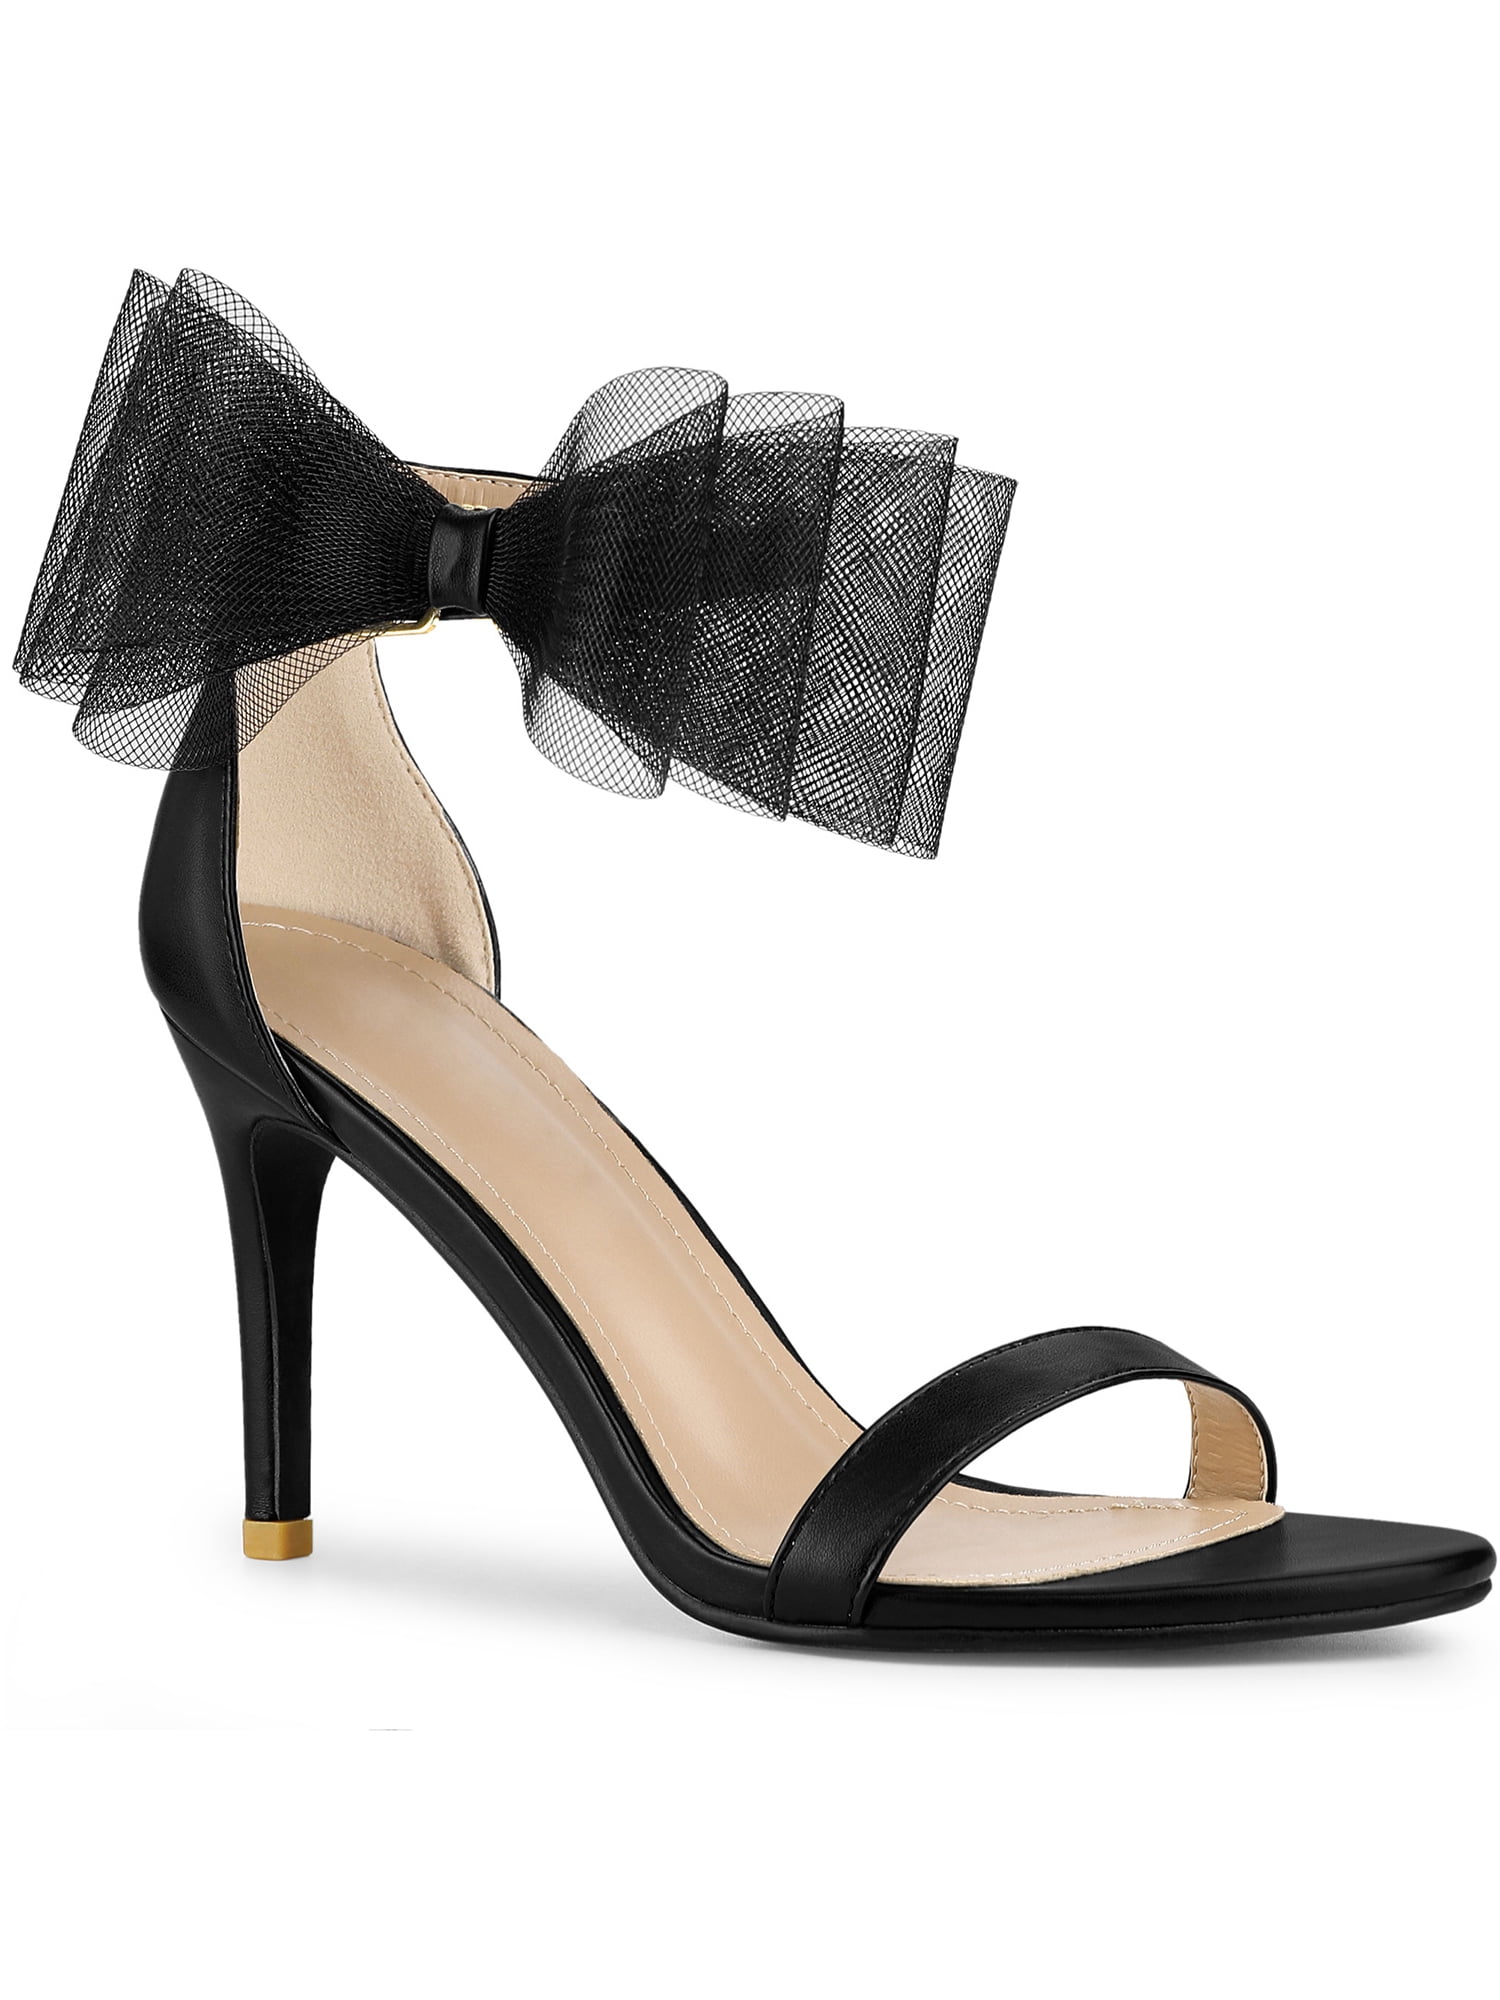 Buy Shoetopia Stylish Western Embellished Black Heels for Women & Girls  /UK3 at Amazon.in